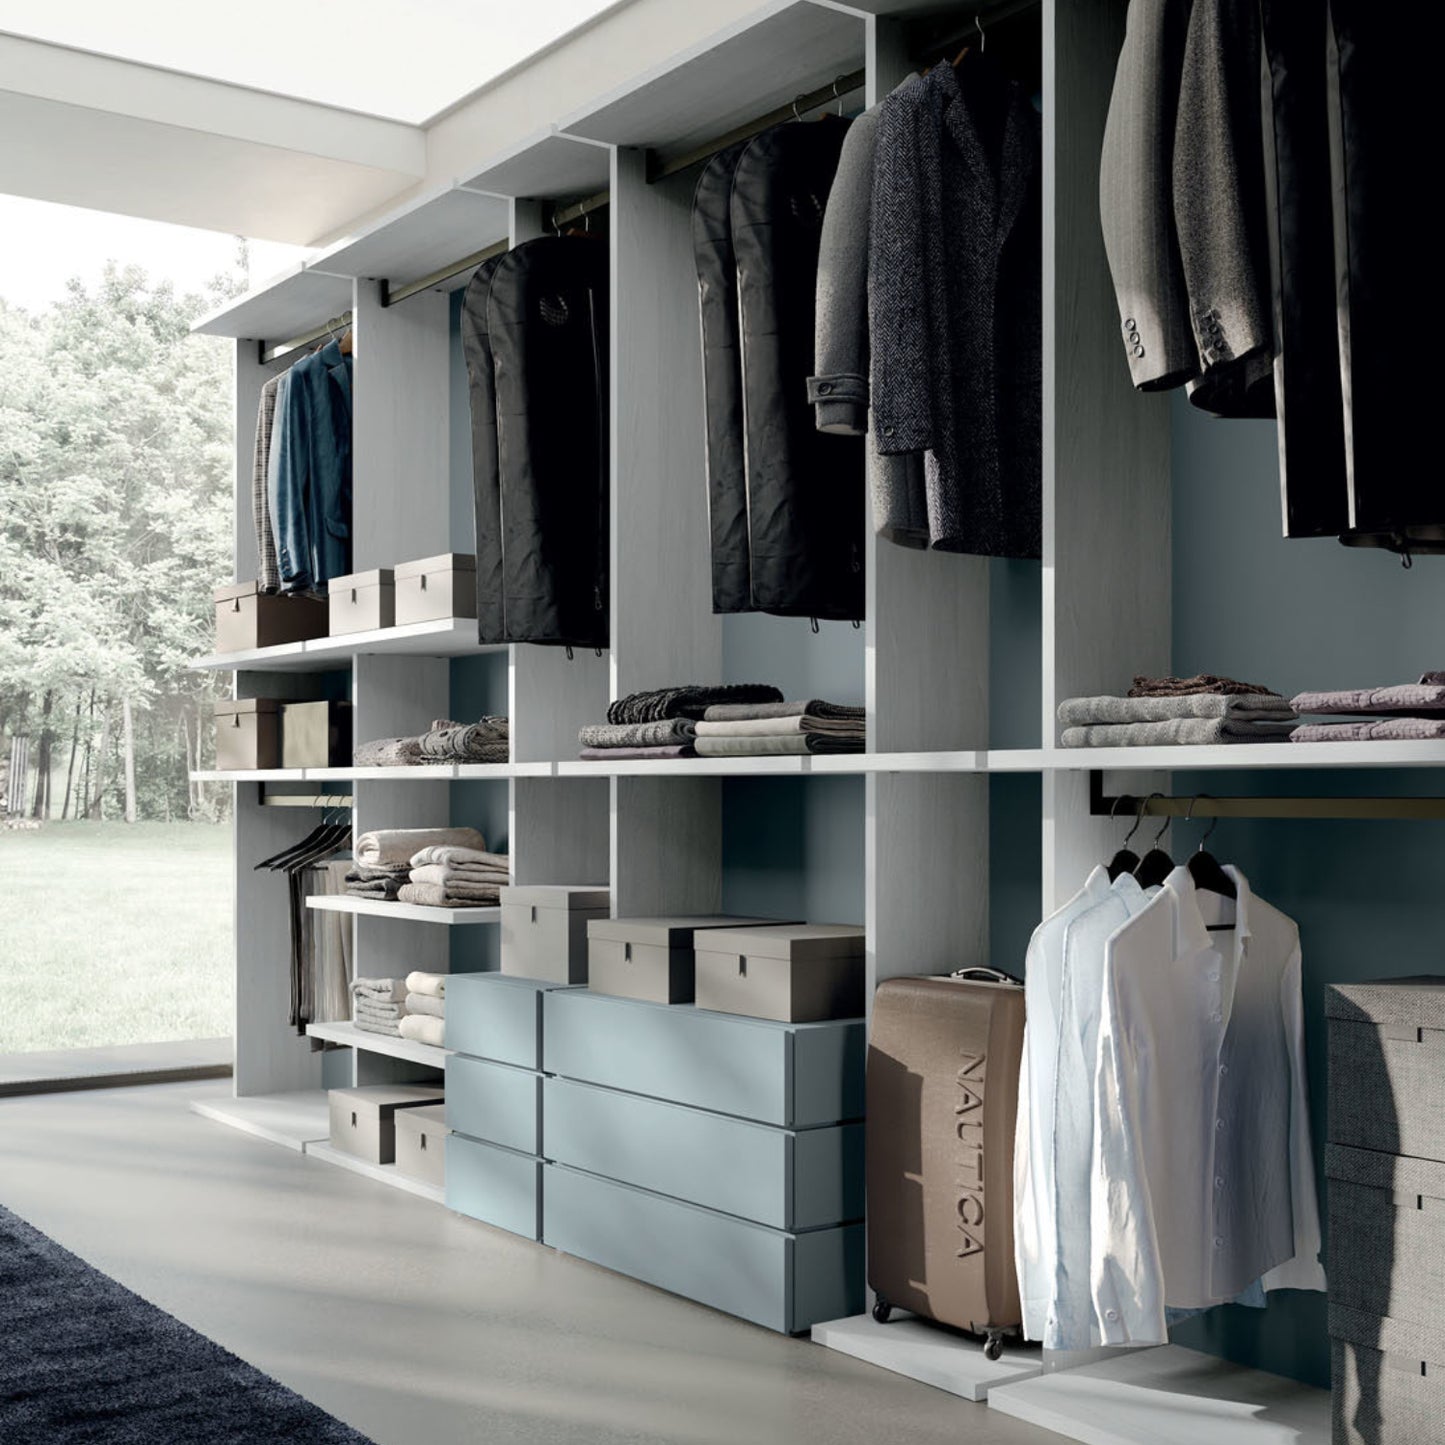 Flexi Walk-in Closet by Orme Design